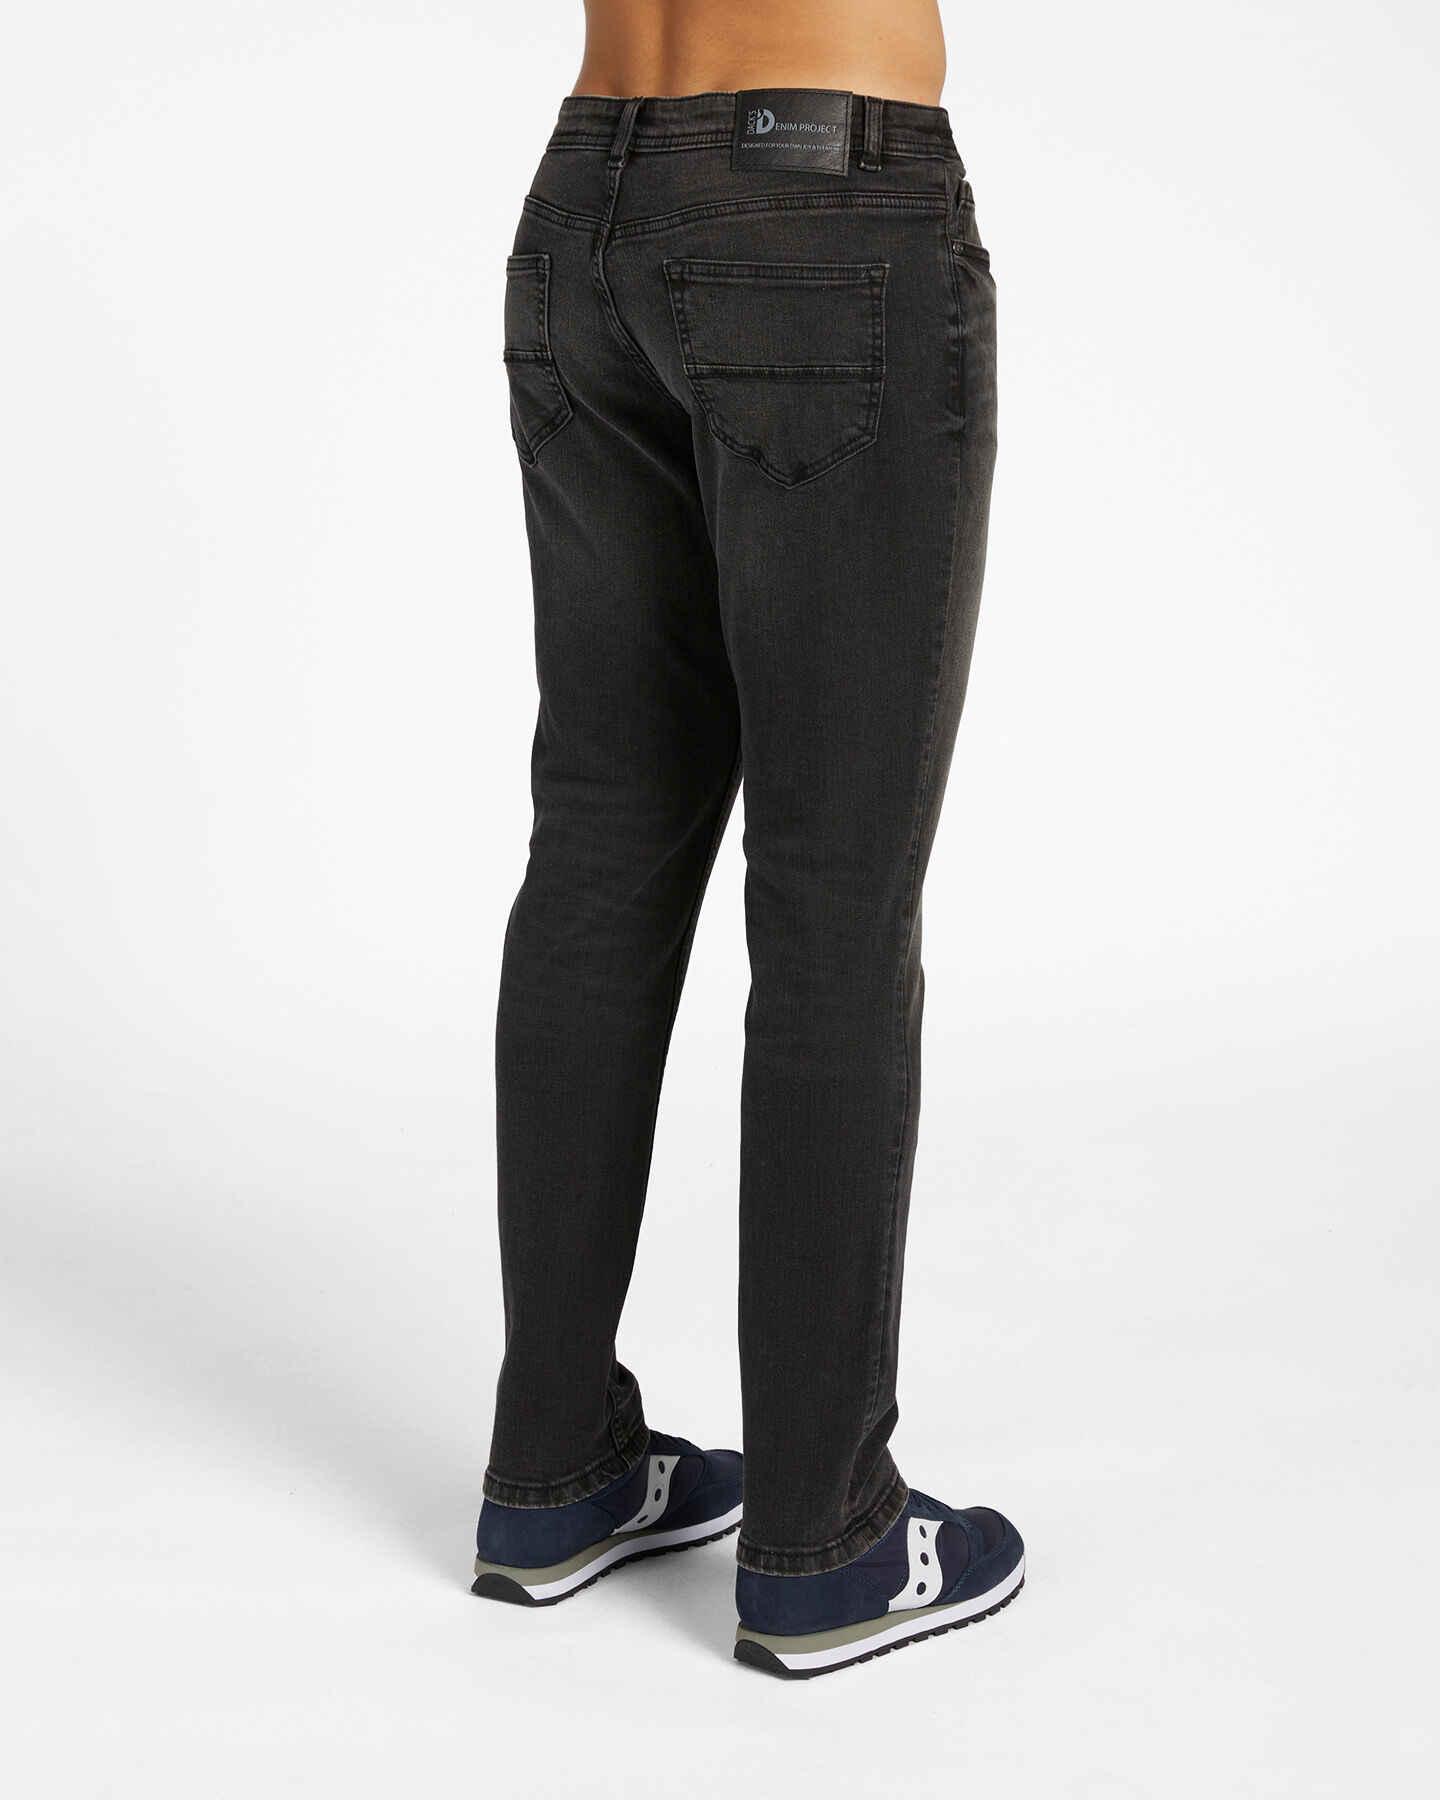  Jeans DACK'S CASUAL CITY M S4106792|DD|56 scatto 1